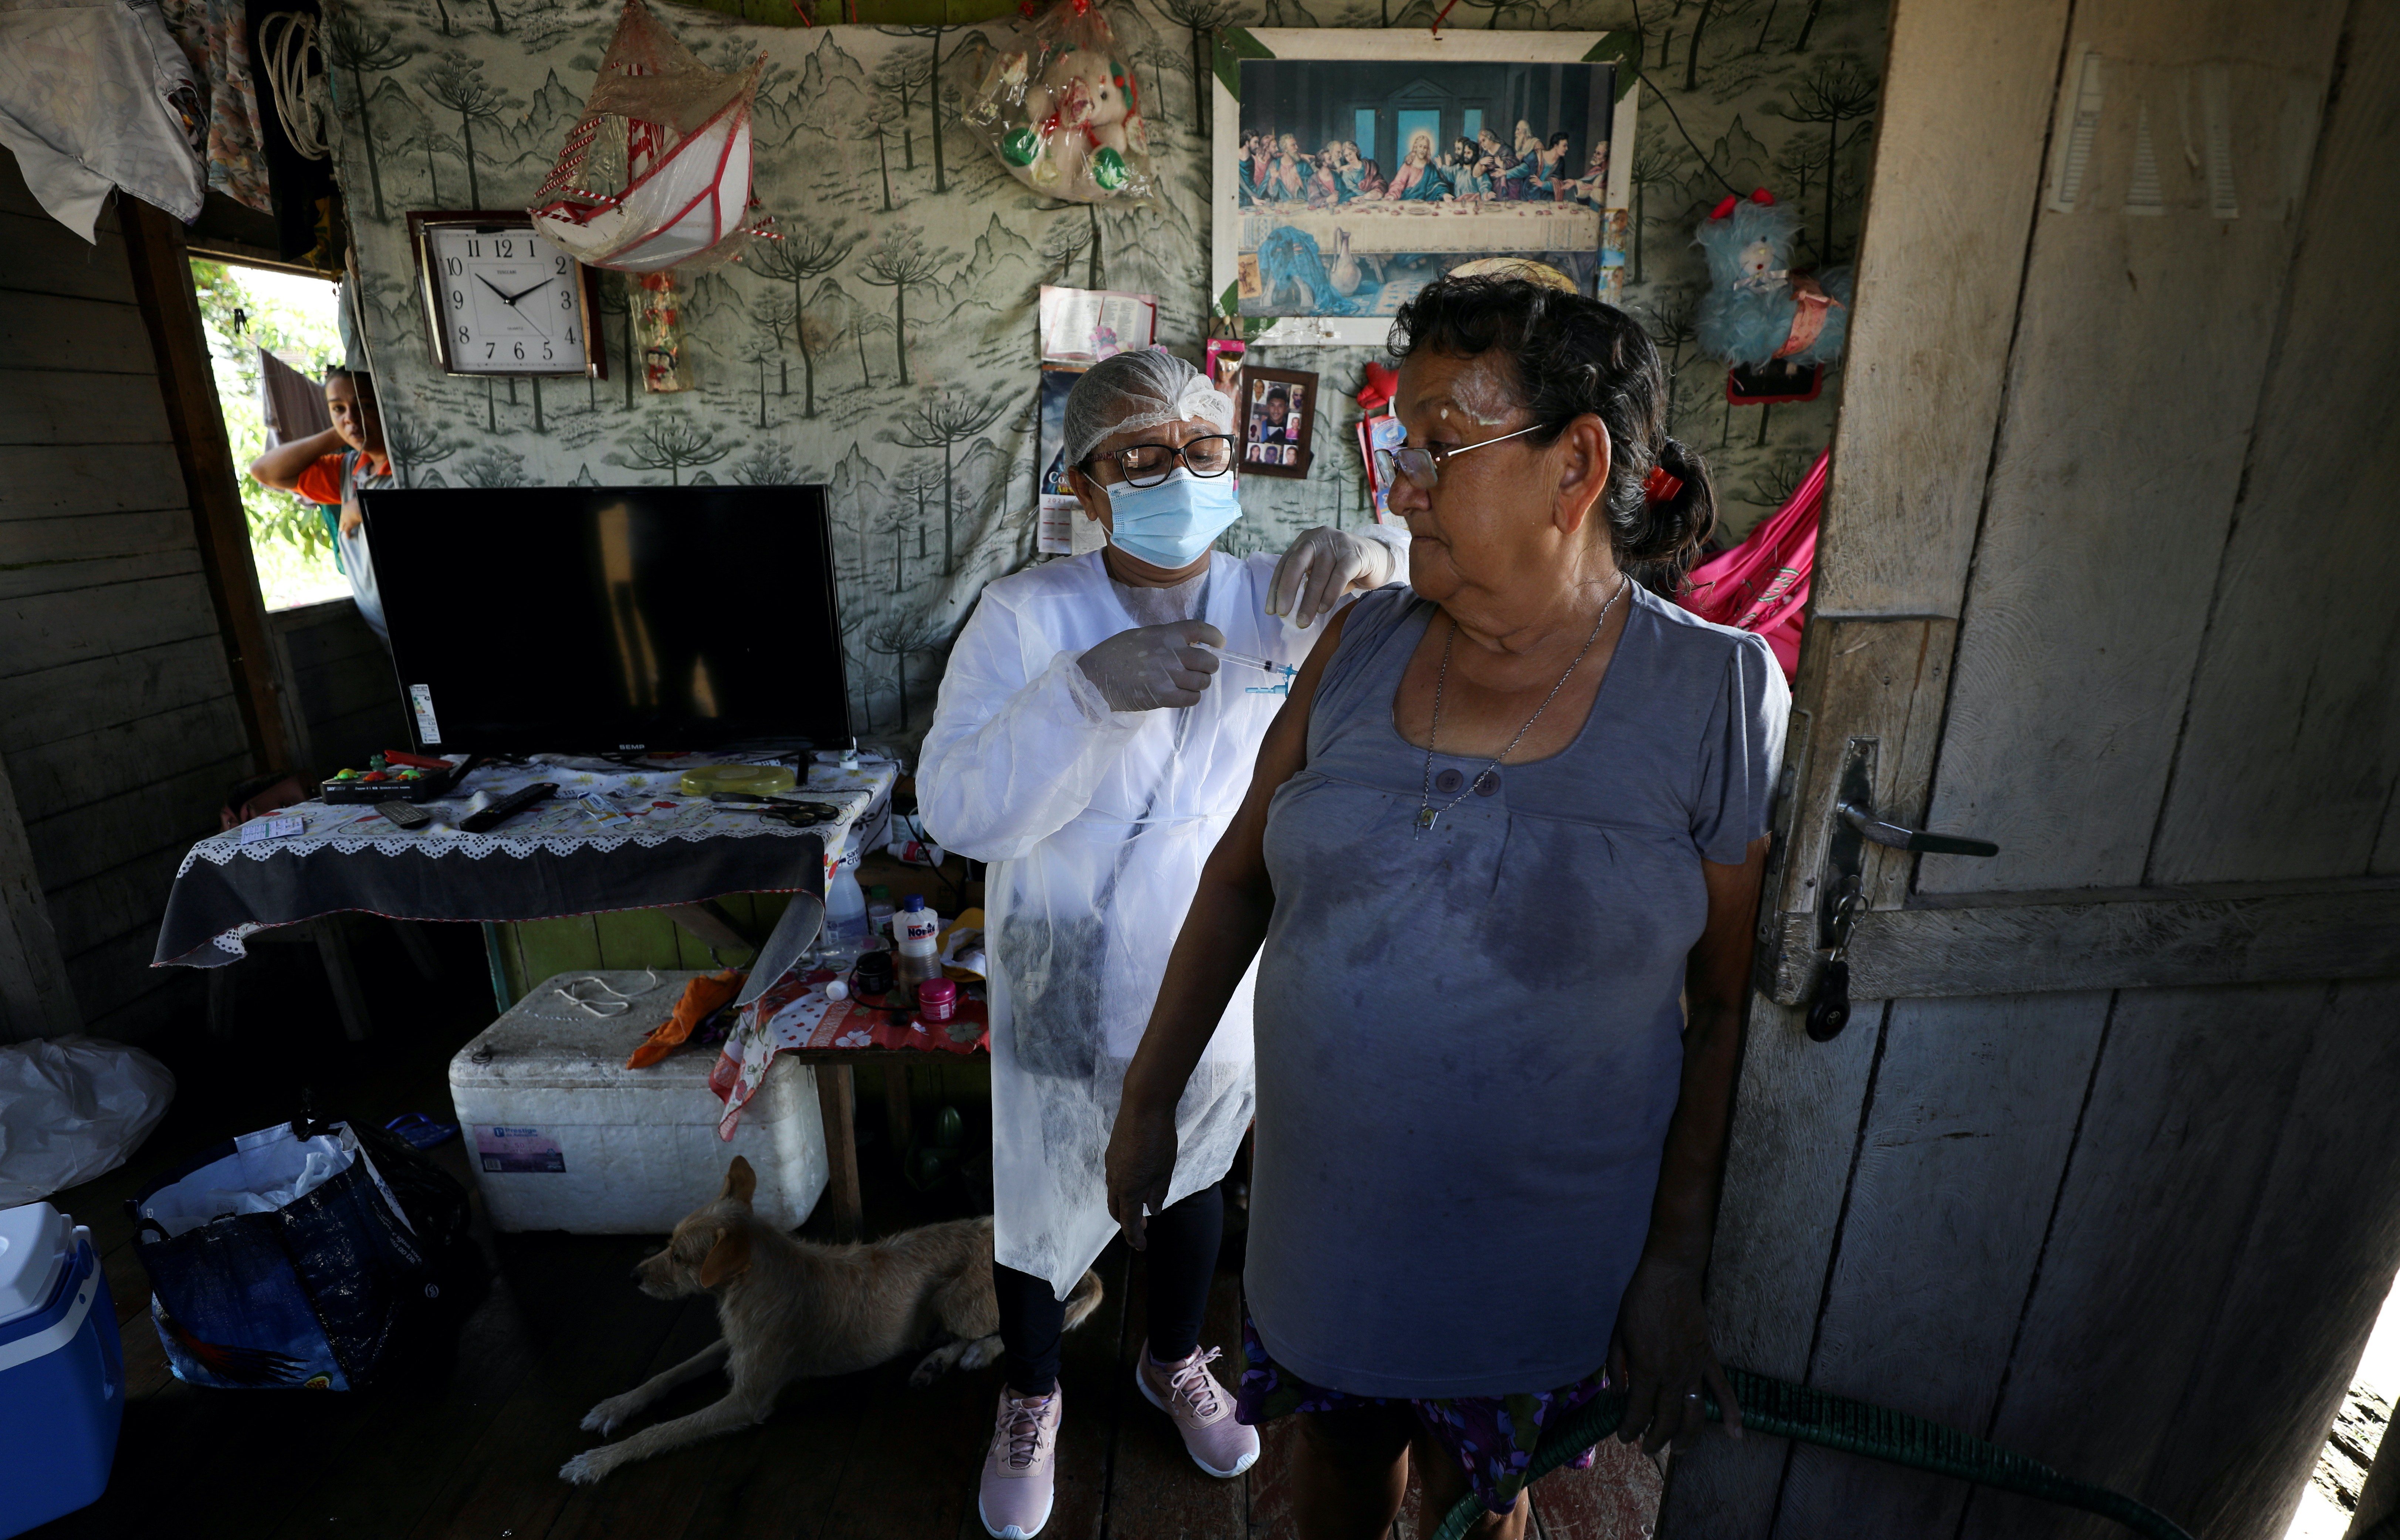 Brazil registers 2,922 new COVID-19 deaths